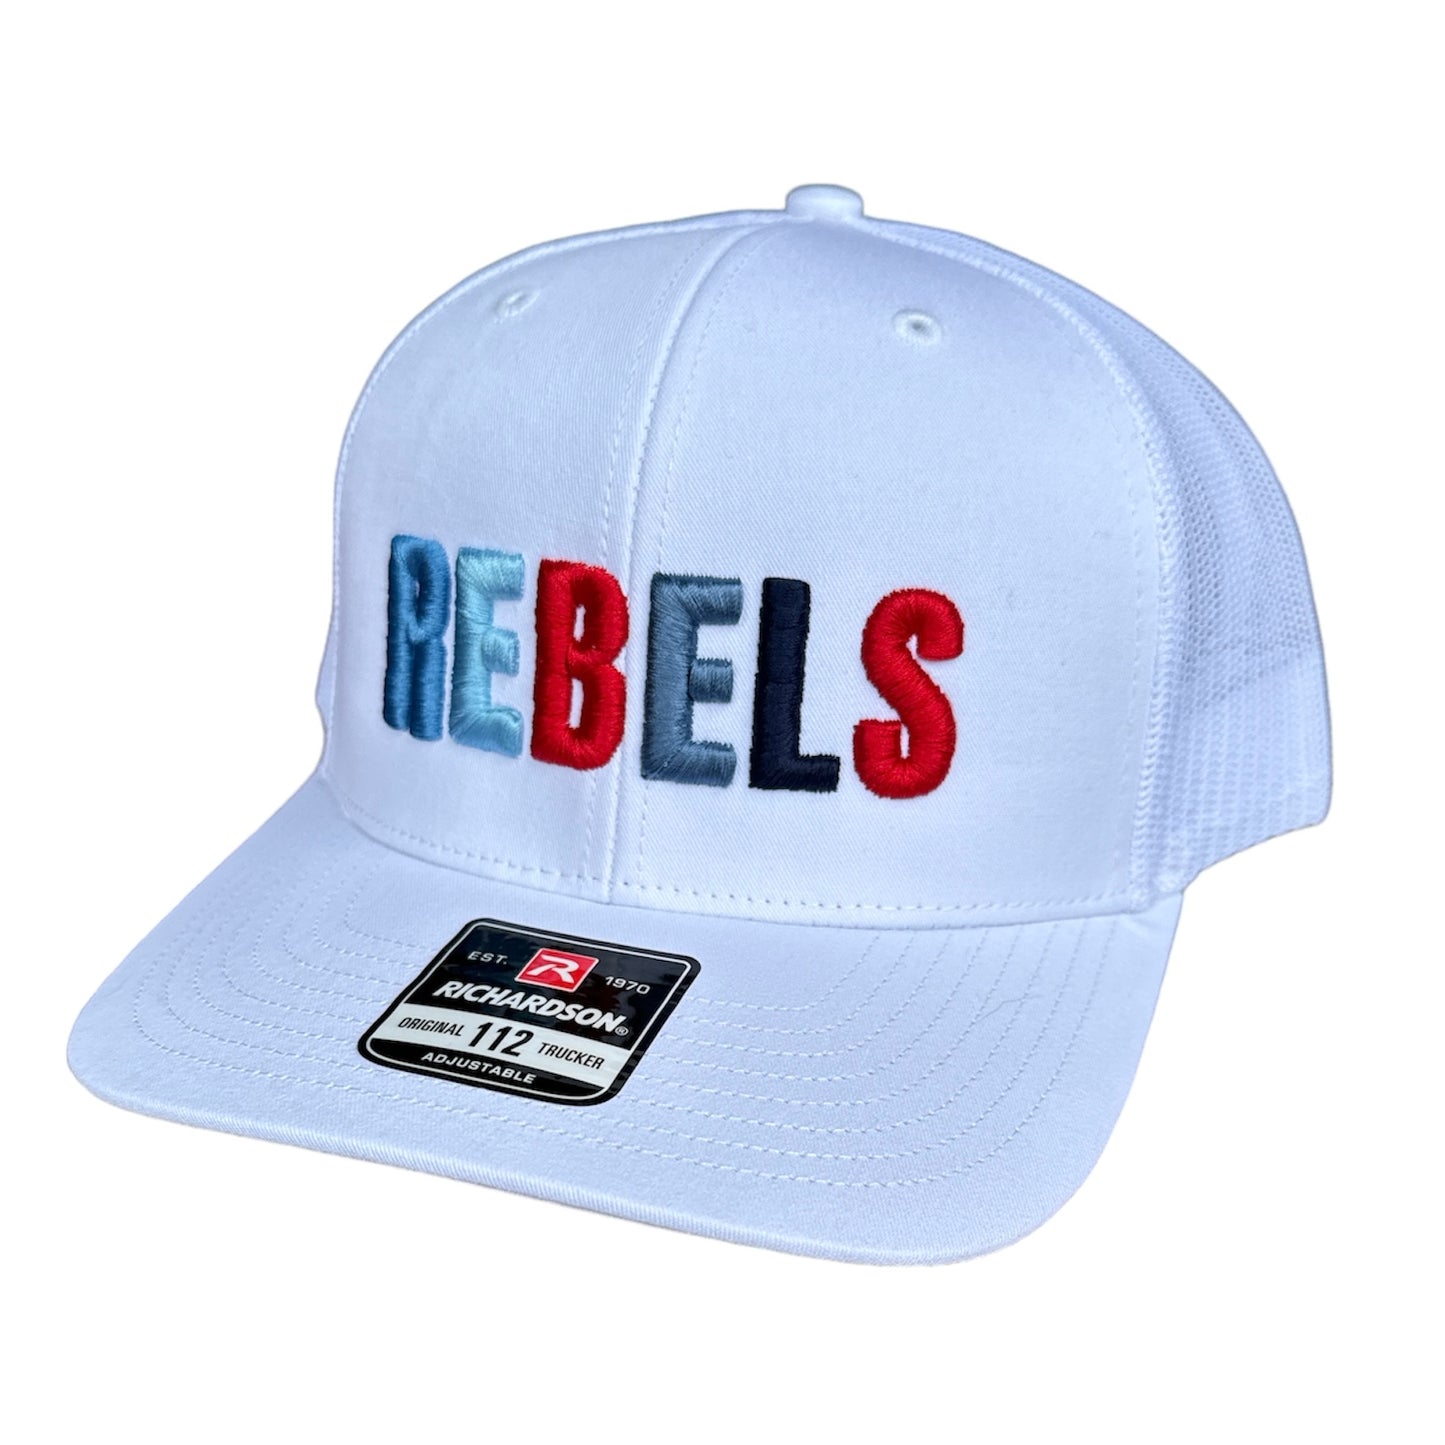 
                  
                    Ole Miss “Rebels” Embroidered Adjustable White Trucker Hat
                  
                